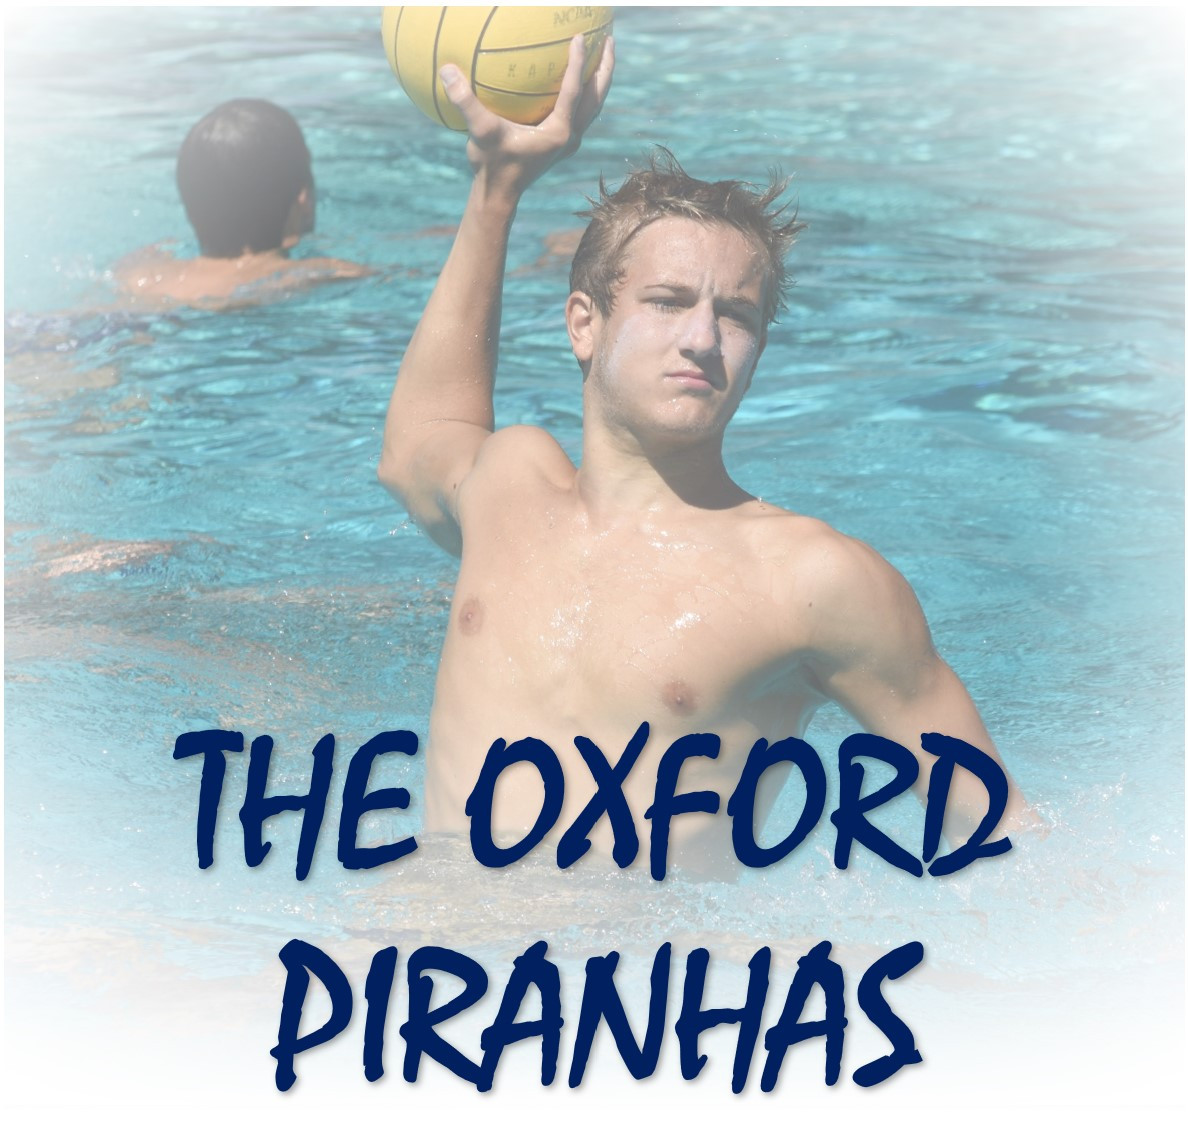 The Oxford Piranhas